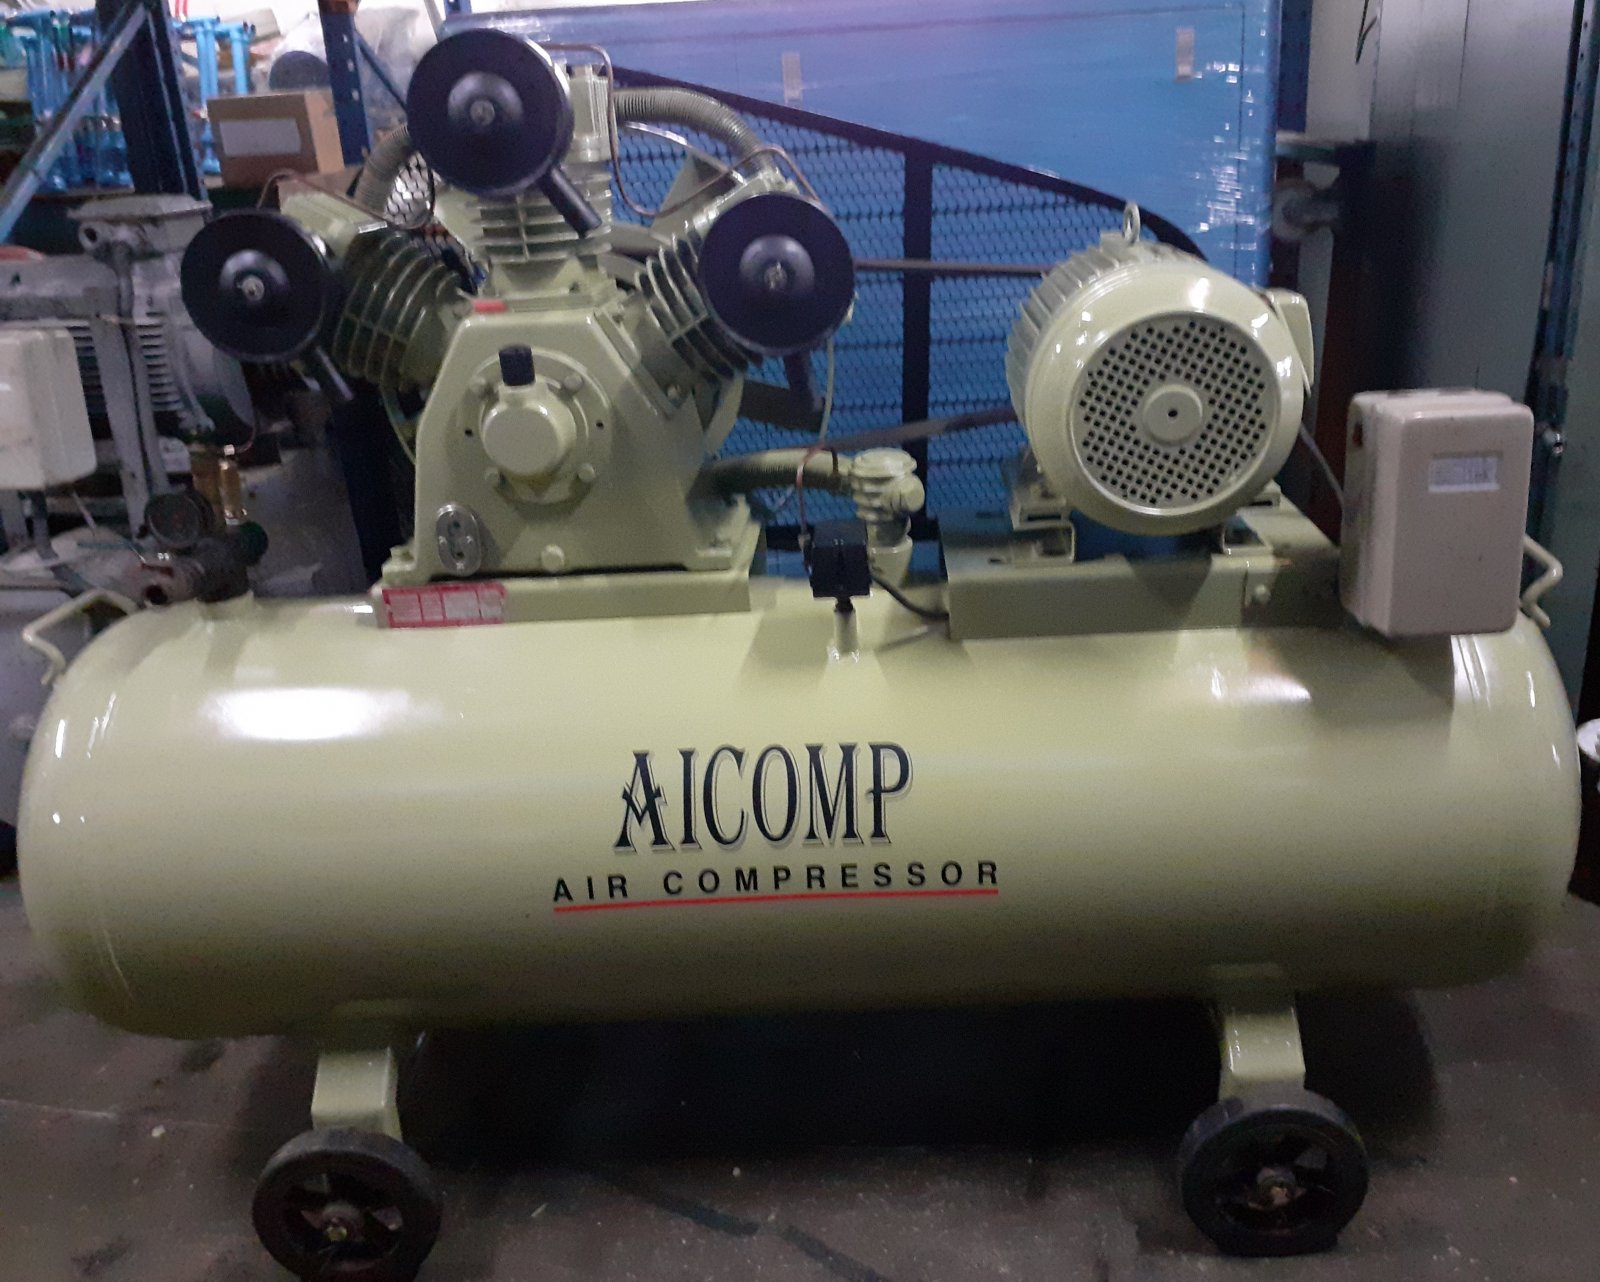 Brand : Aicomp